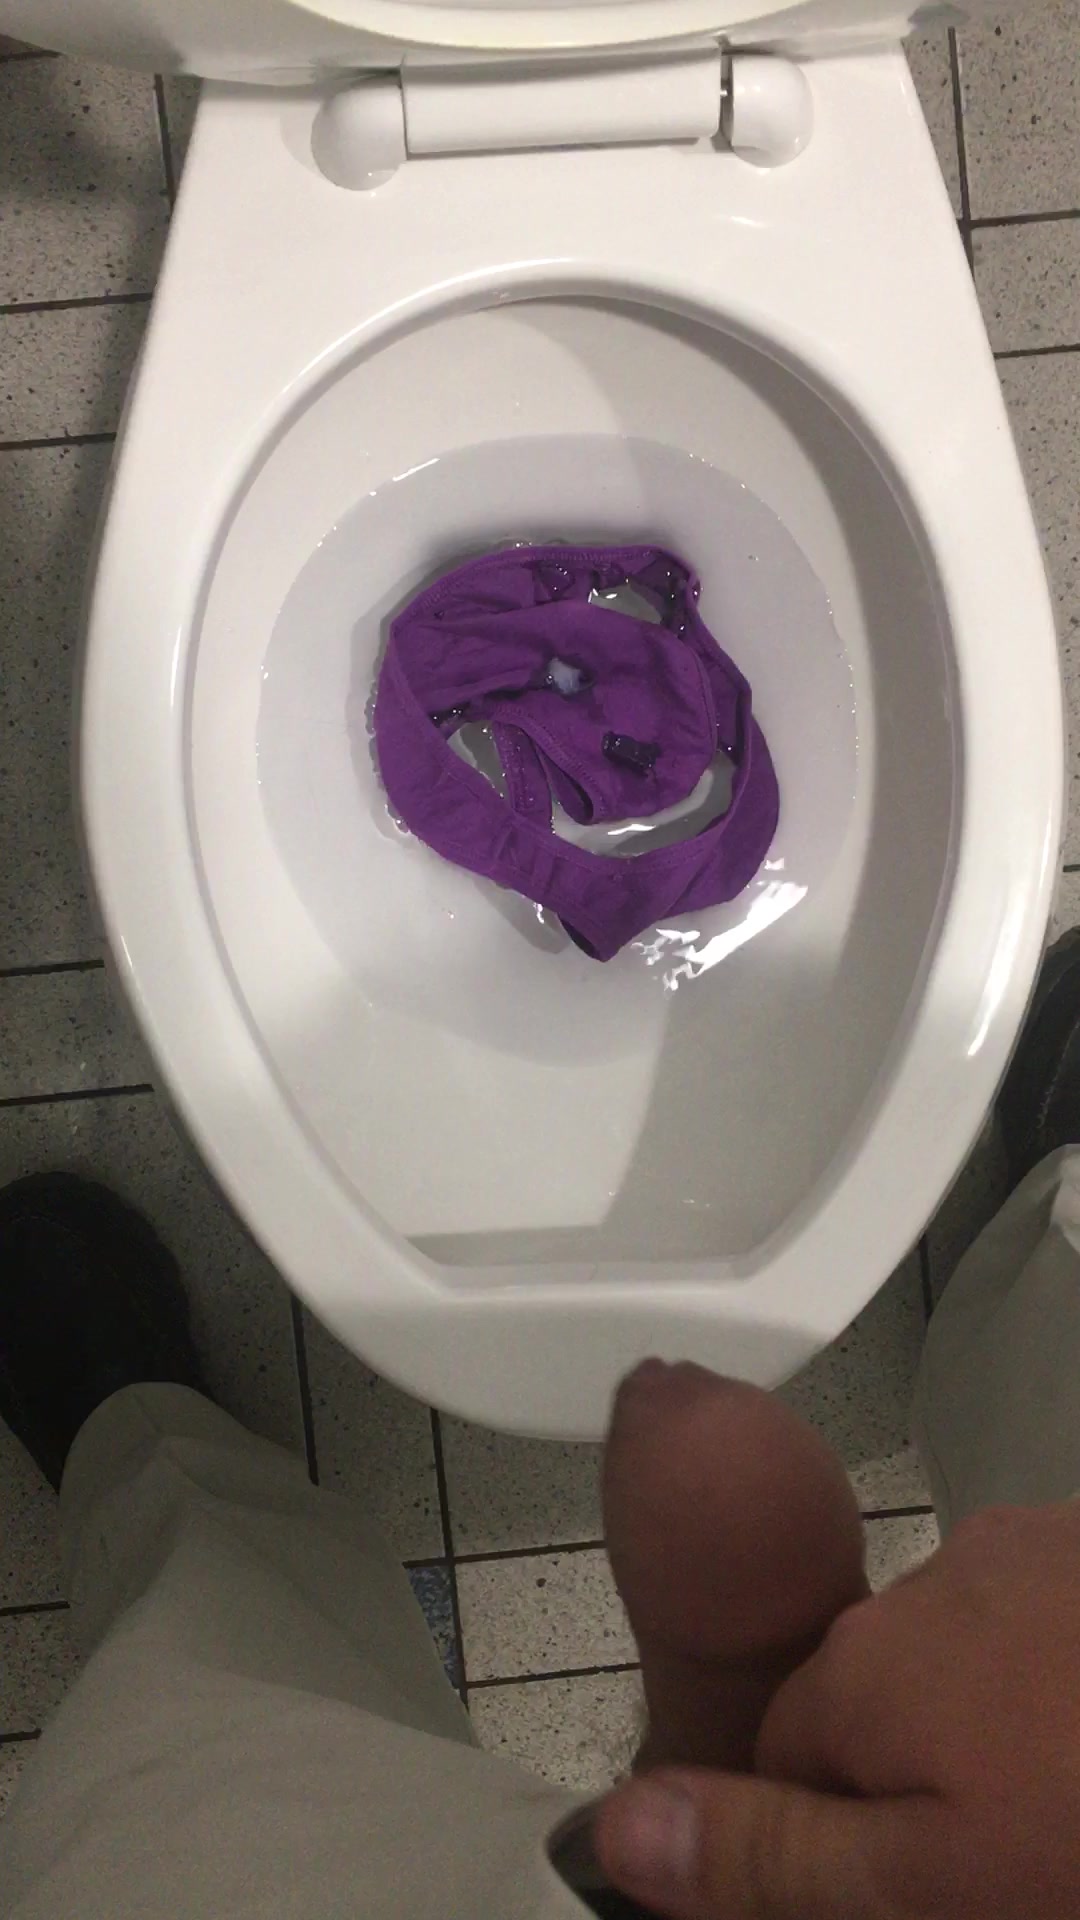 Bathroom Panties Porn - Cumming in panties then flushing them down the toilet - ThisVid.com